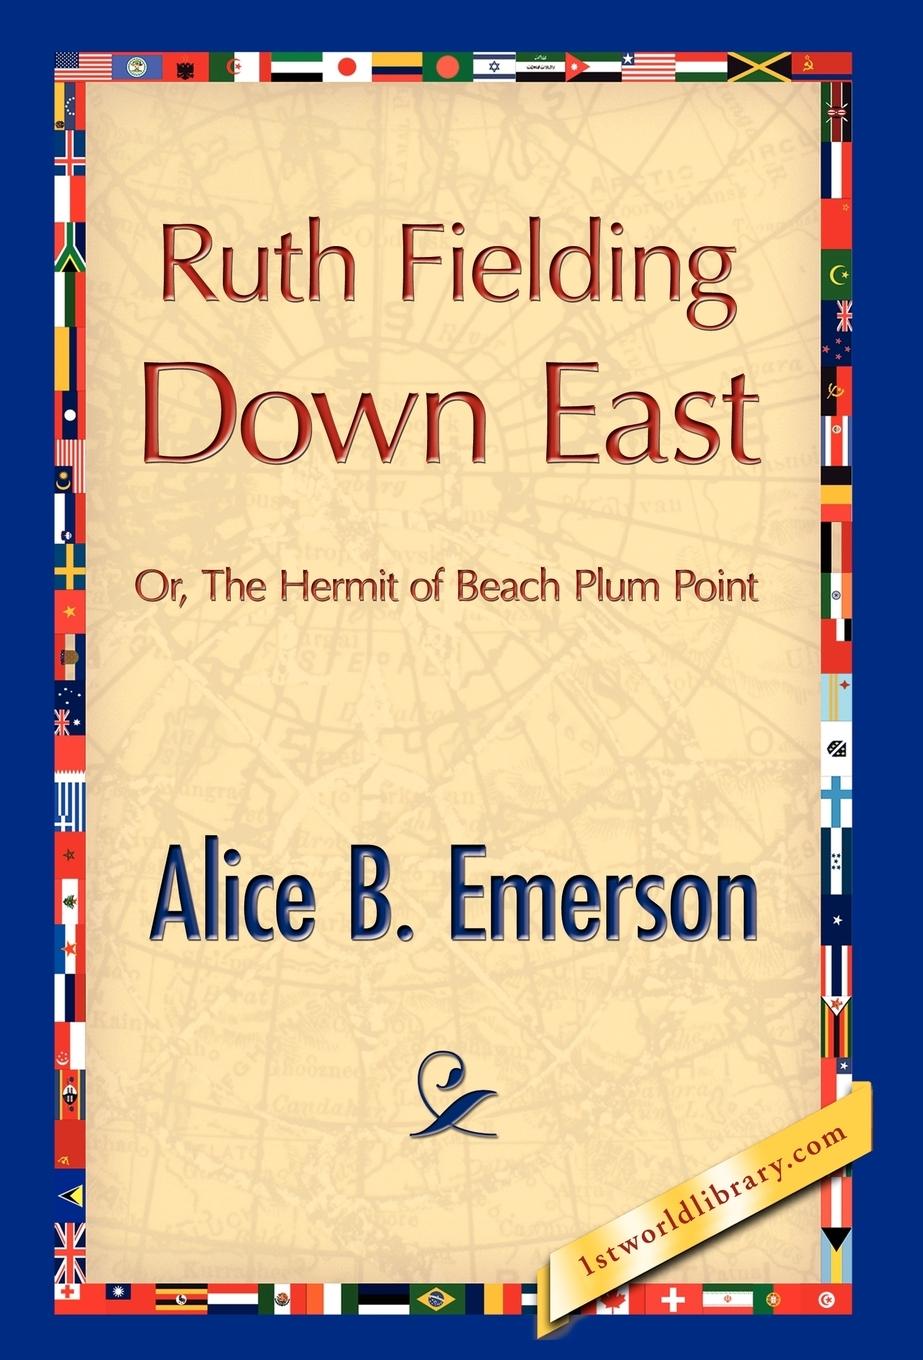 Ruth Fielding Down East - Emerson, Alice B.